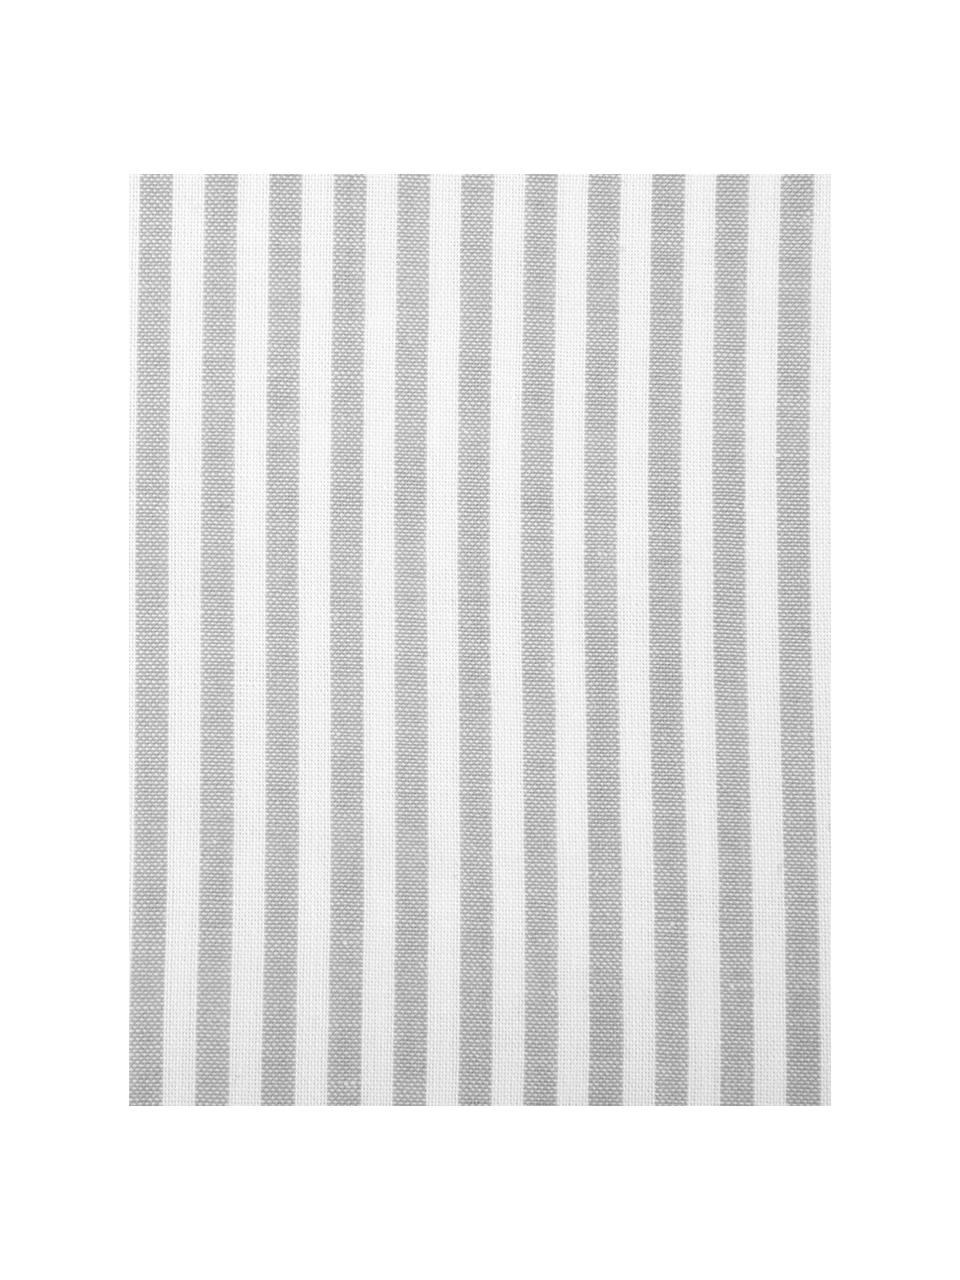 Parure copripiumino in cotone ranforce Ellie, Tessuto: Renforcé, Bianco, grigio, 200 x 200 cm + 2 federe 50 x 80 cm